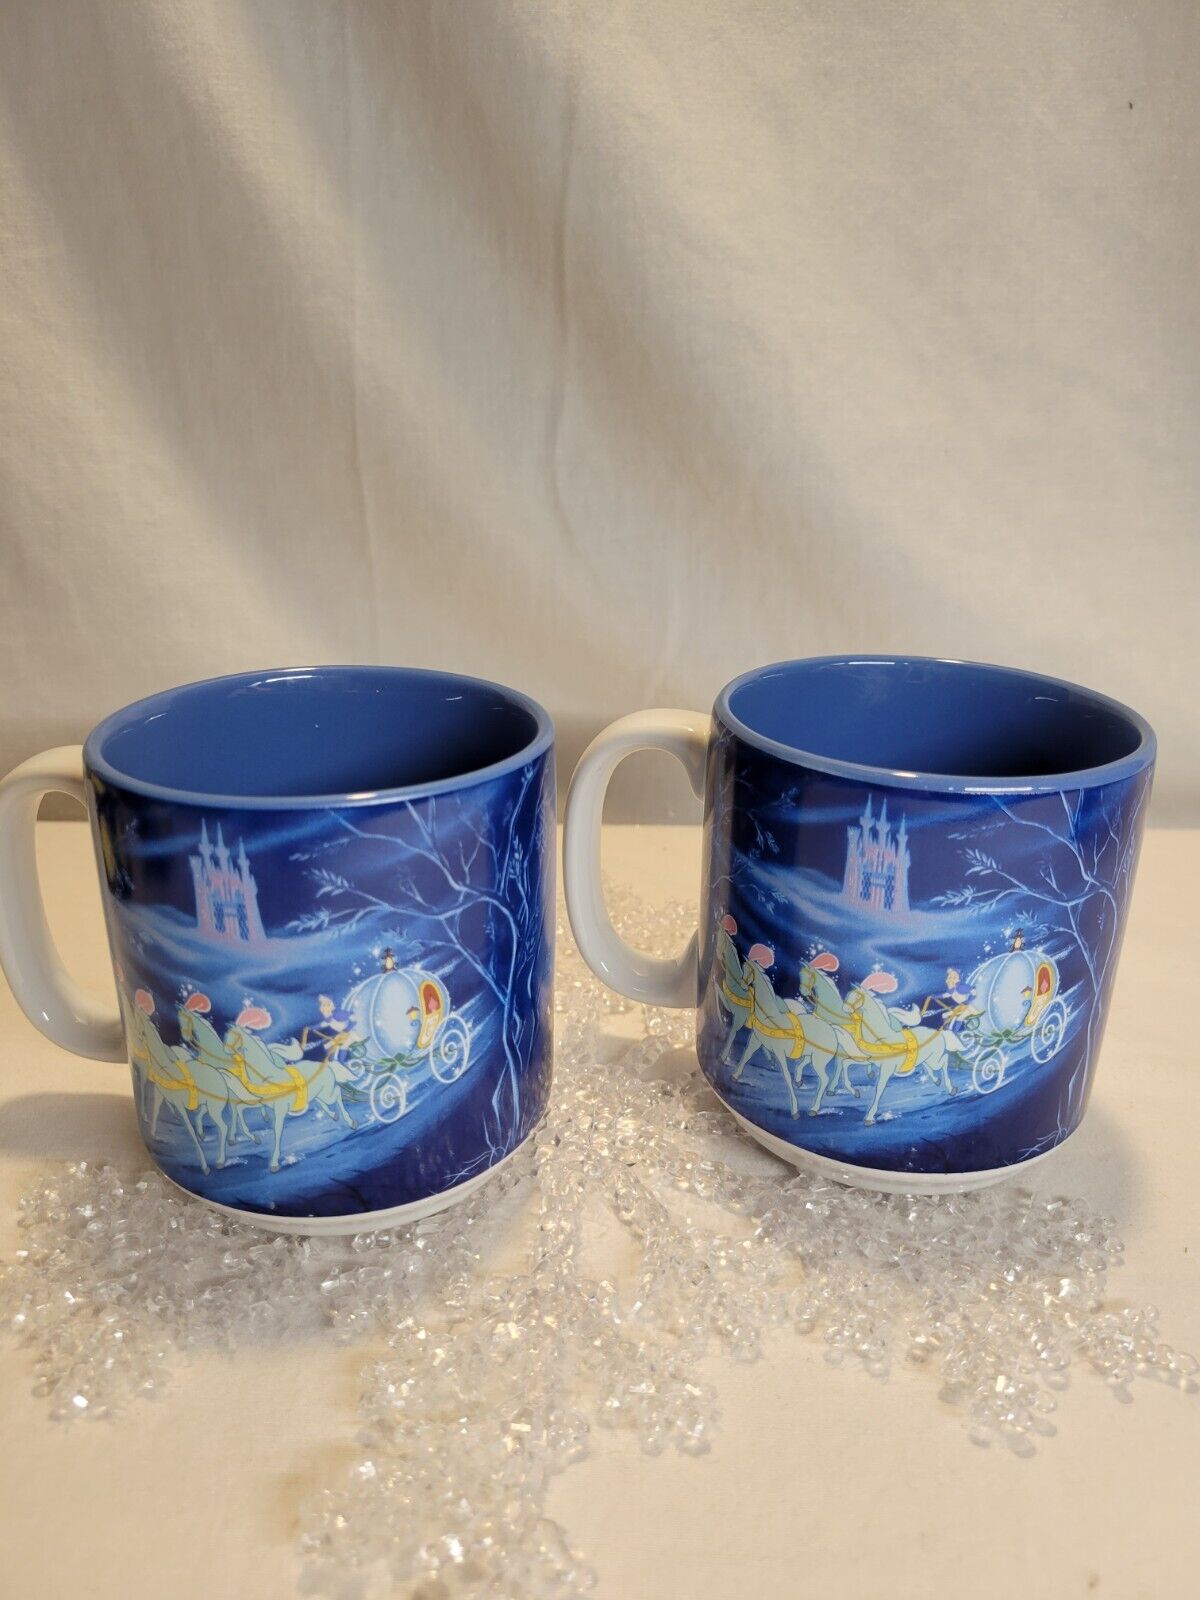 Vintage Disney Coffee or Tea Mugs Cinderella Cups 1990s Collectible Set of 2